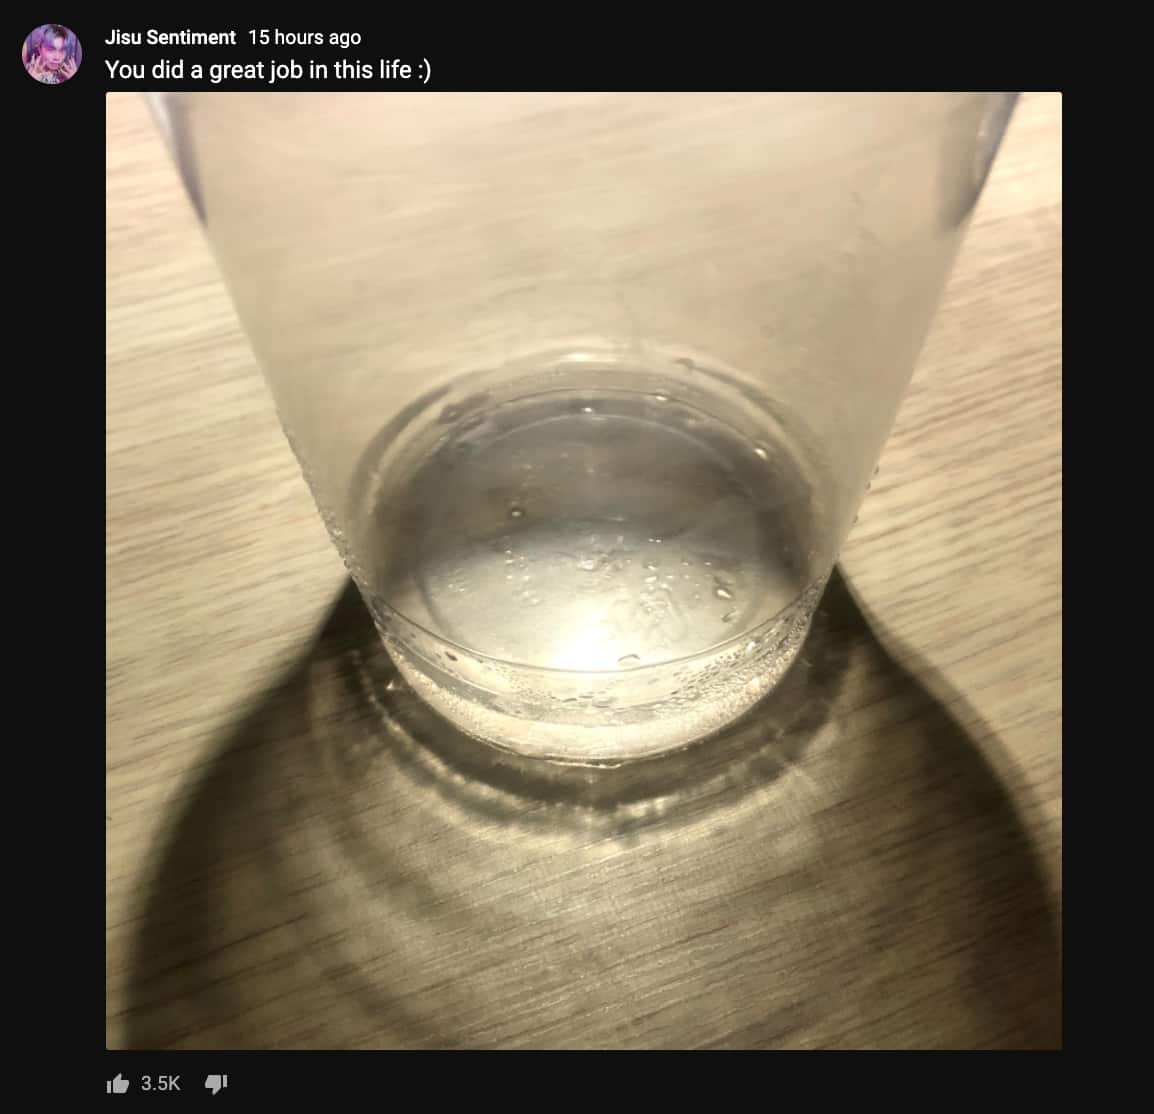 Jisu Sentiment empty glass Community YouTube post